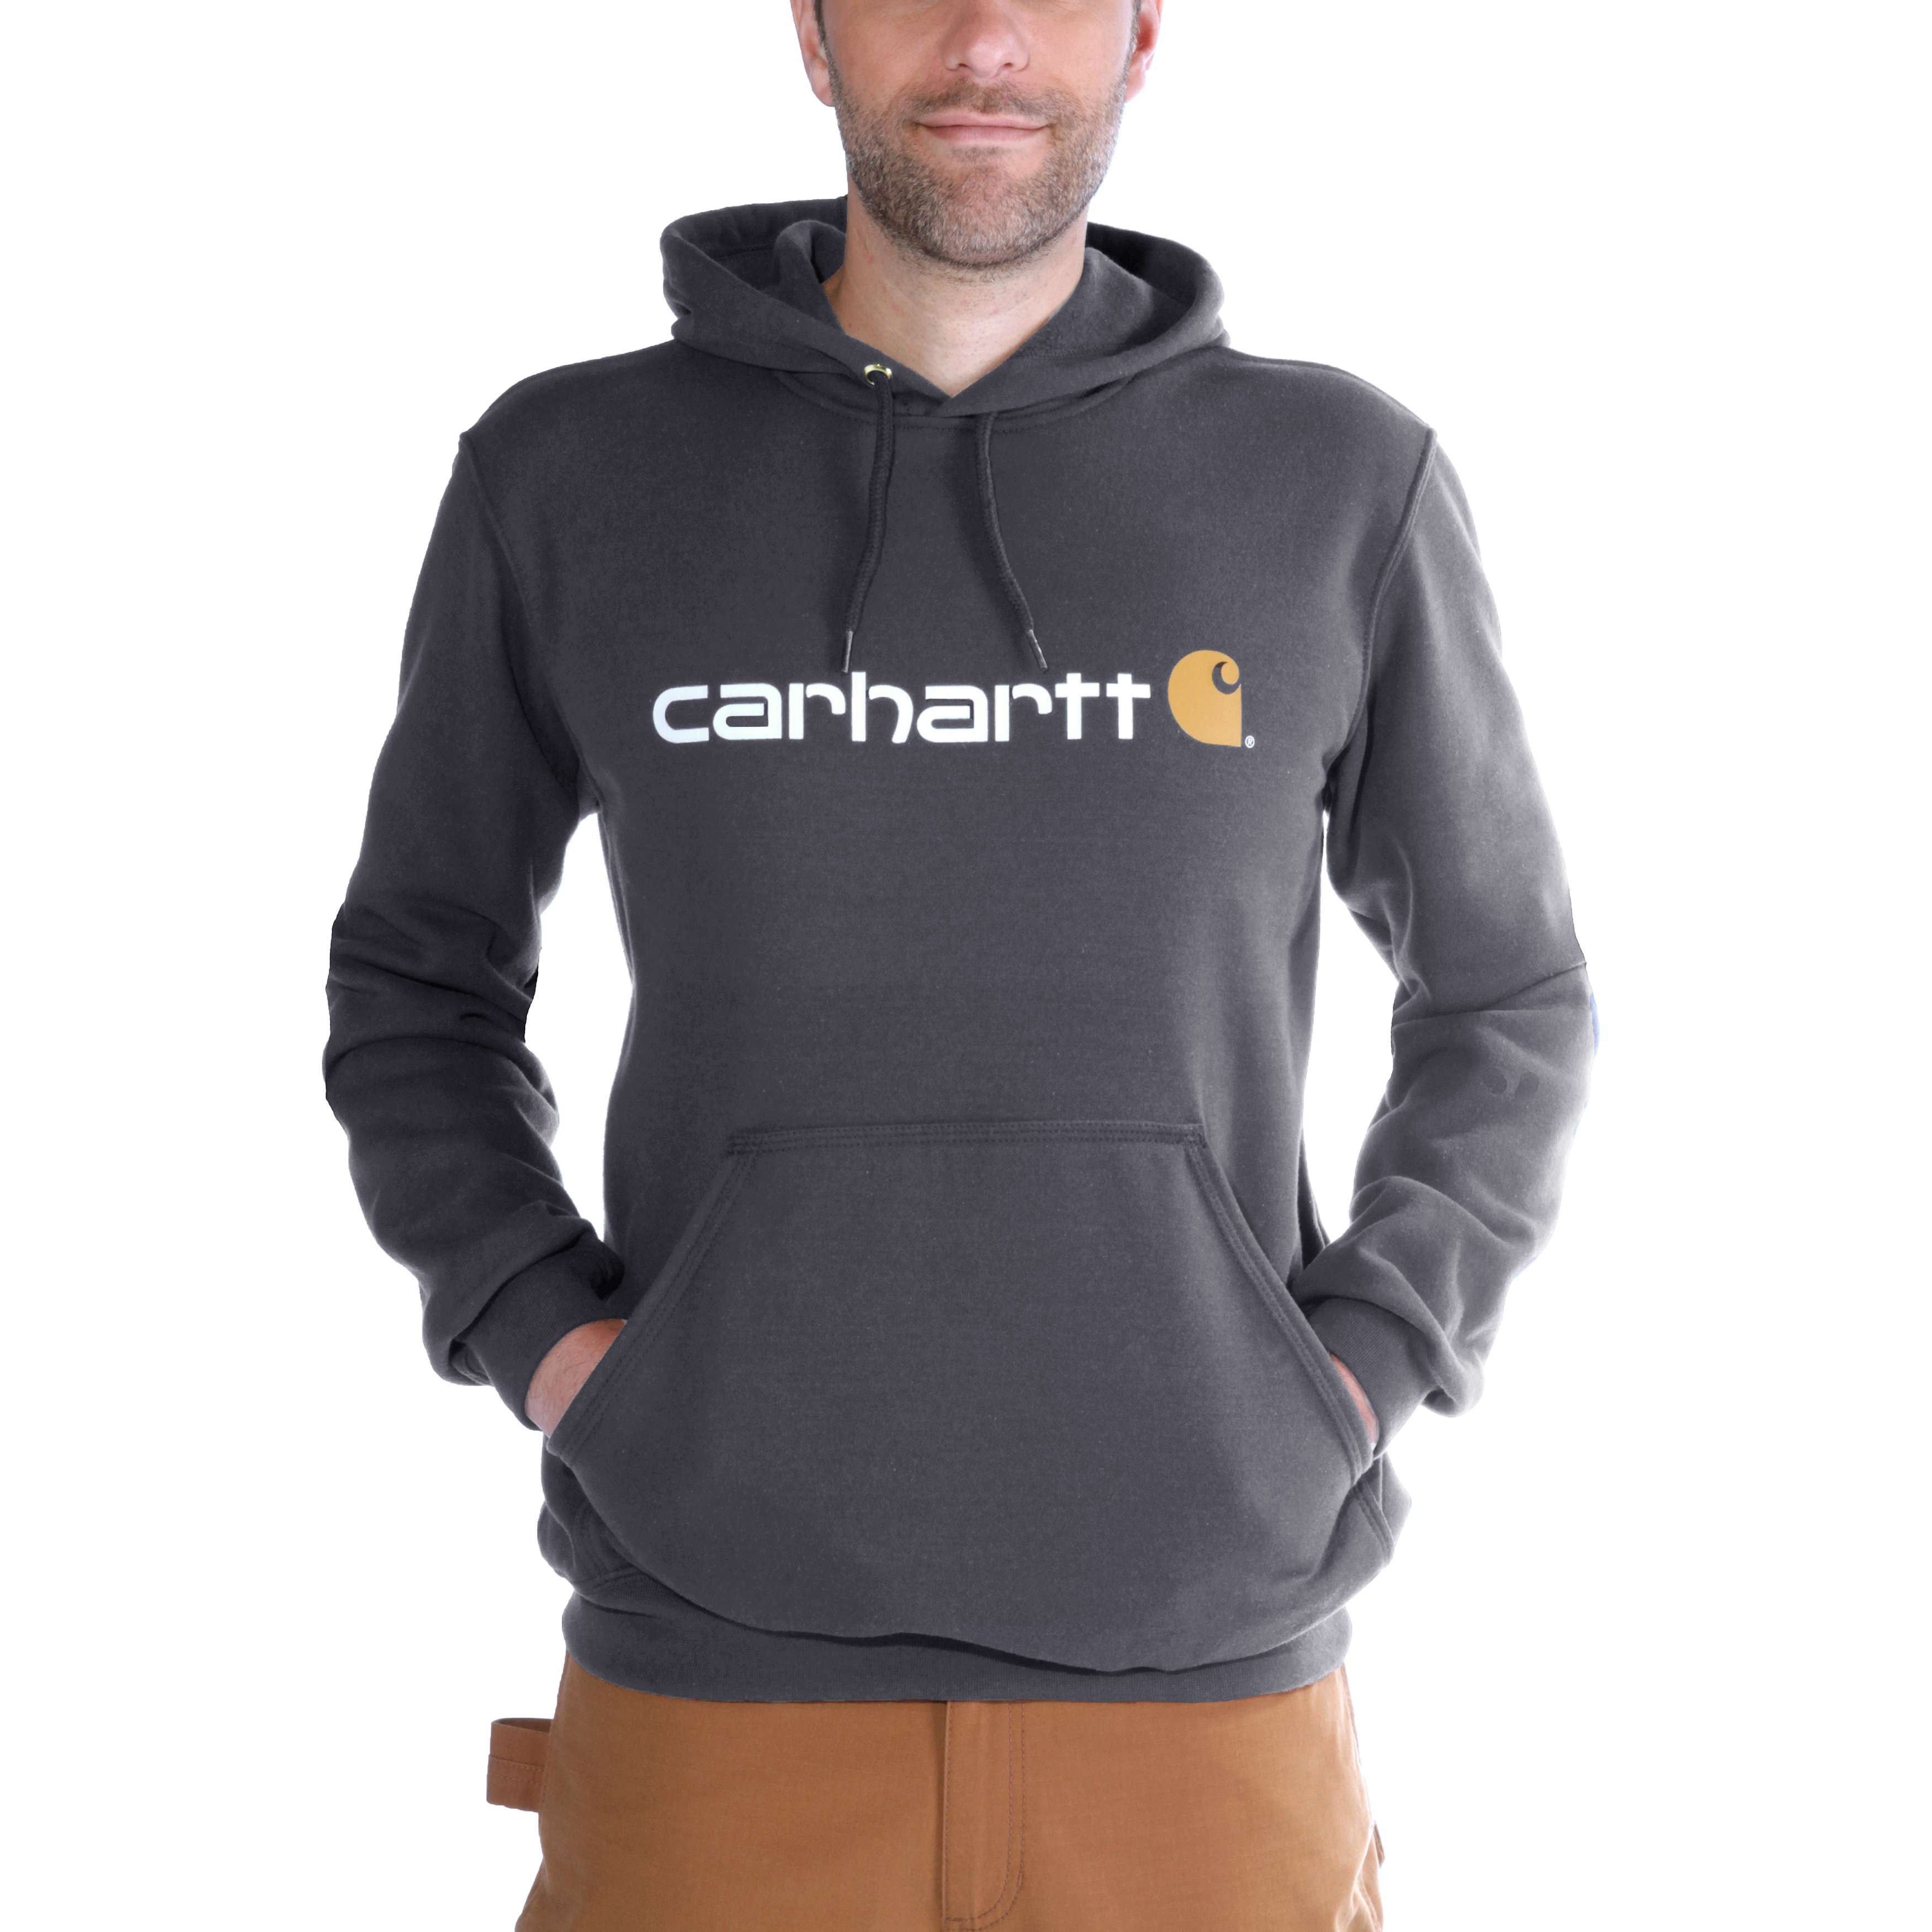 Carhartt Hoodies - Loose fit herensweater met capuchon en carhartt-logo Grijs - L